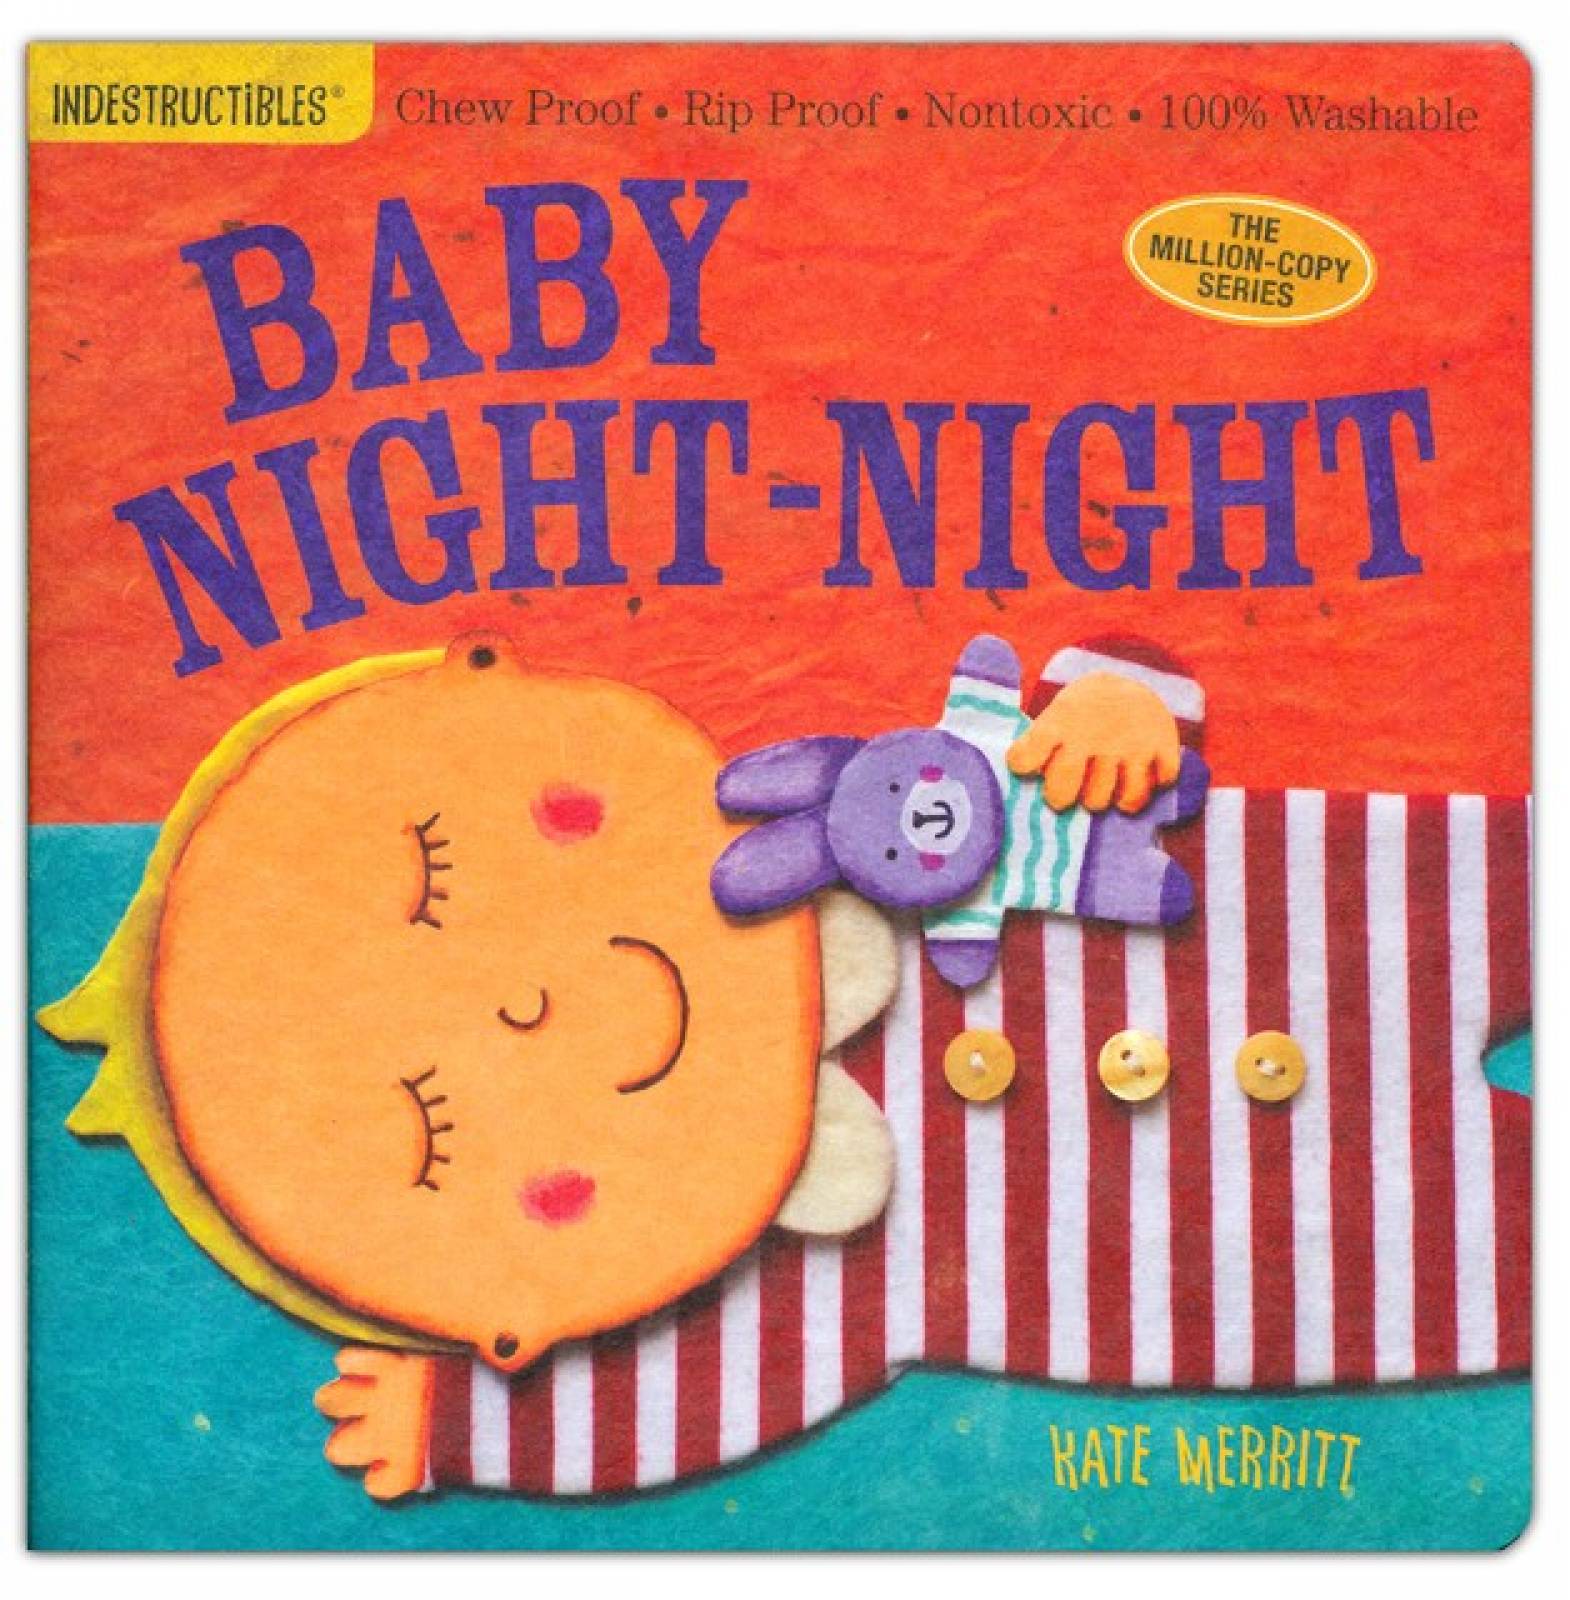 Indestructibles: Baby Night Night